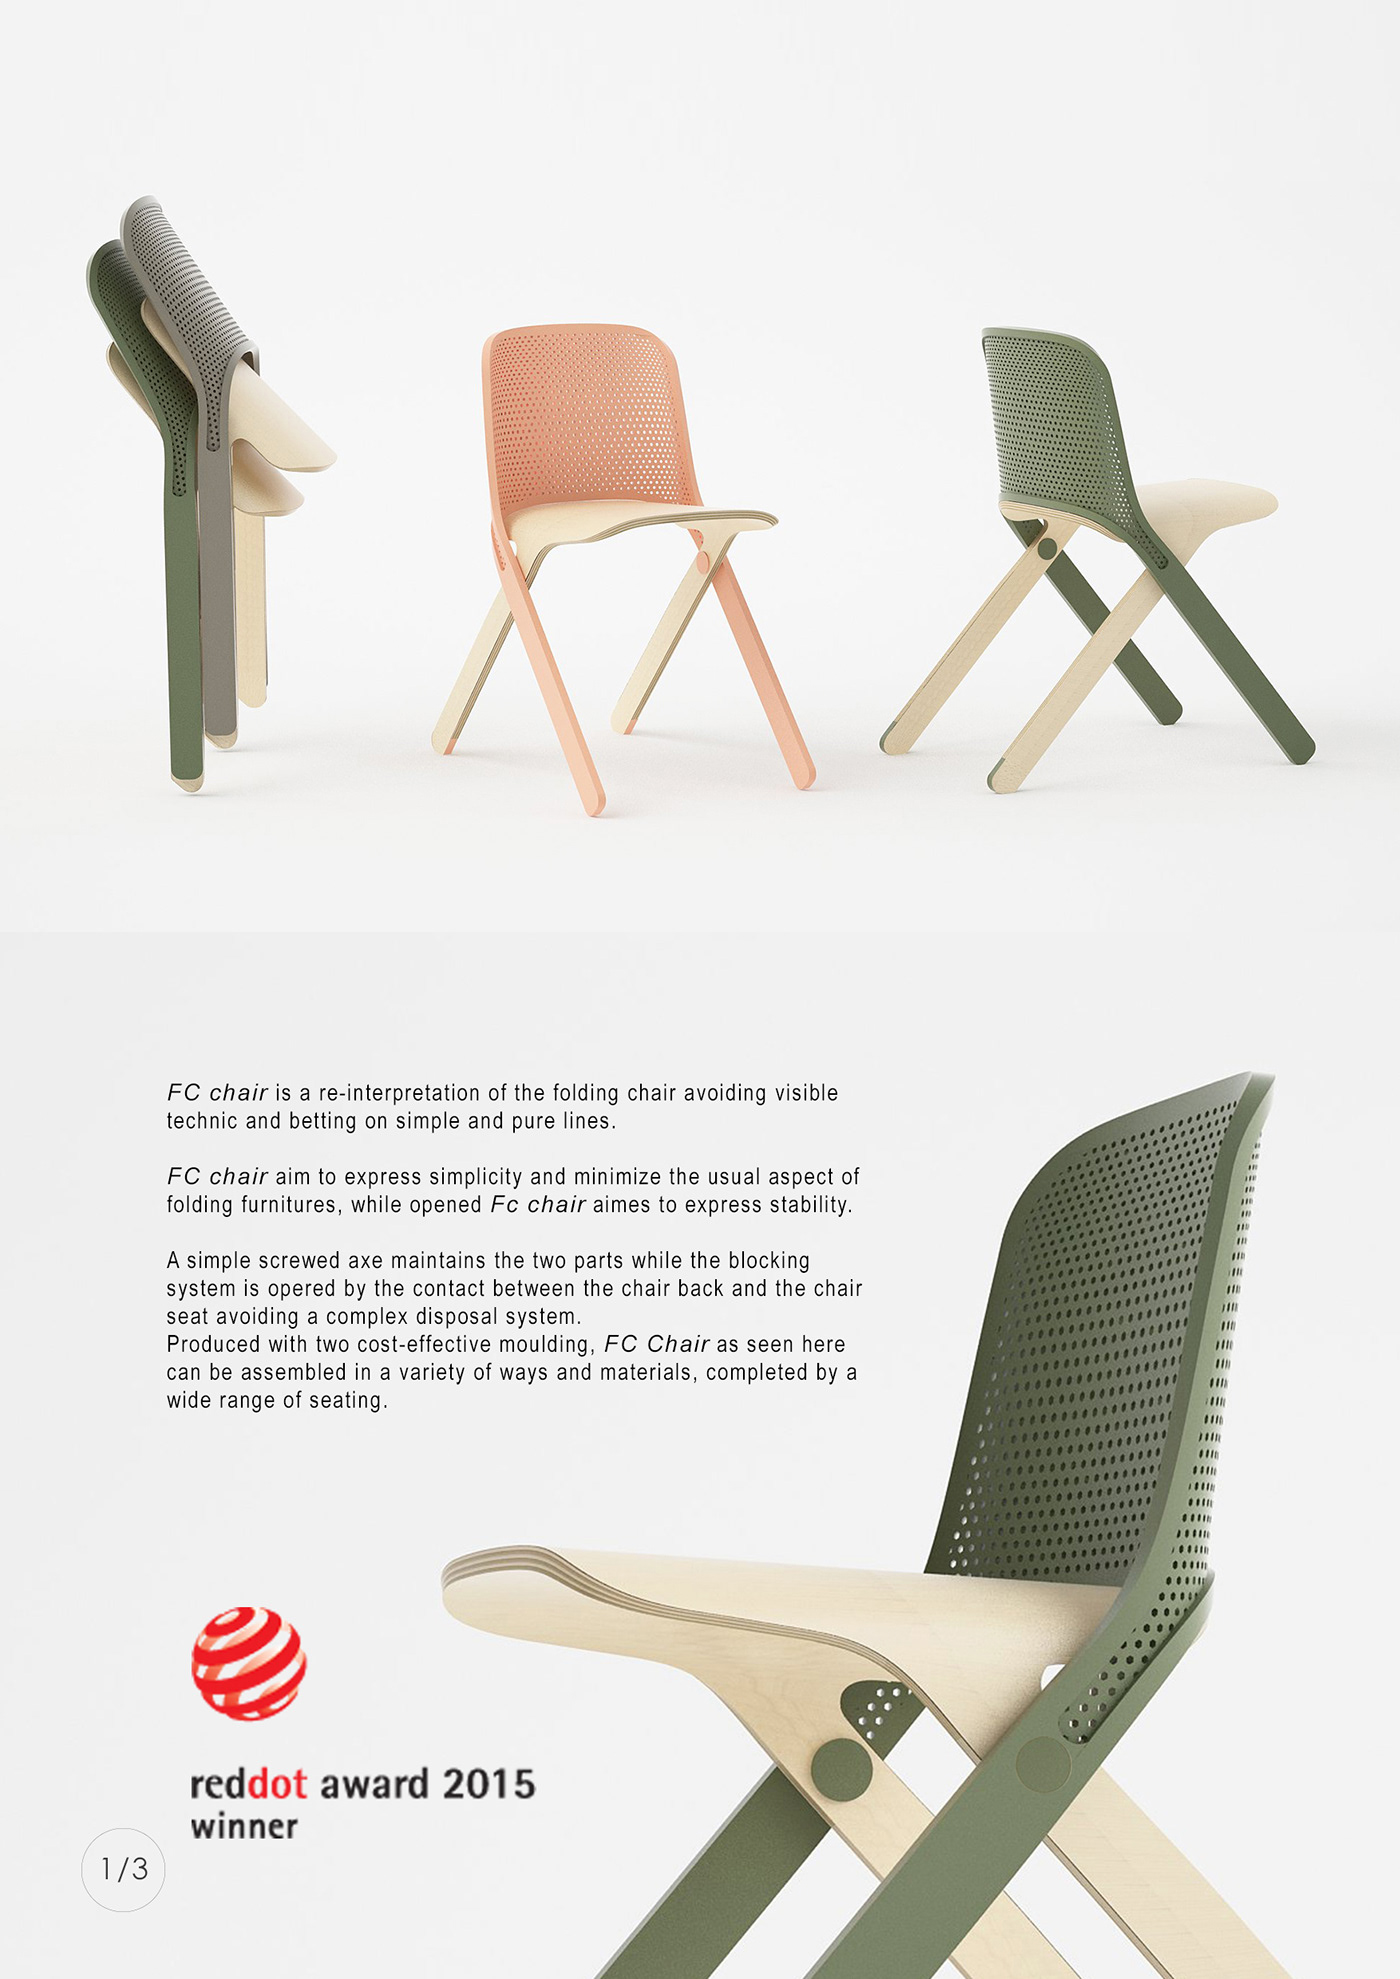 FC chair a foldable chair